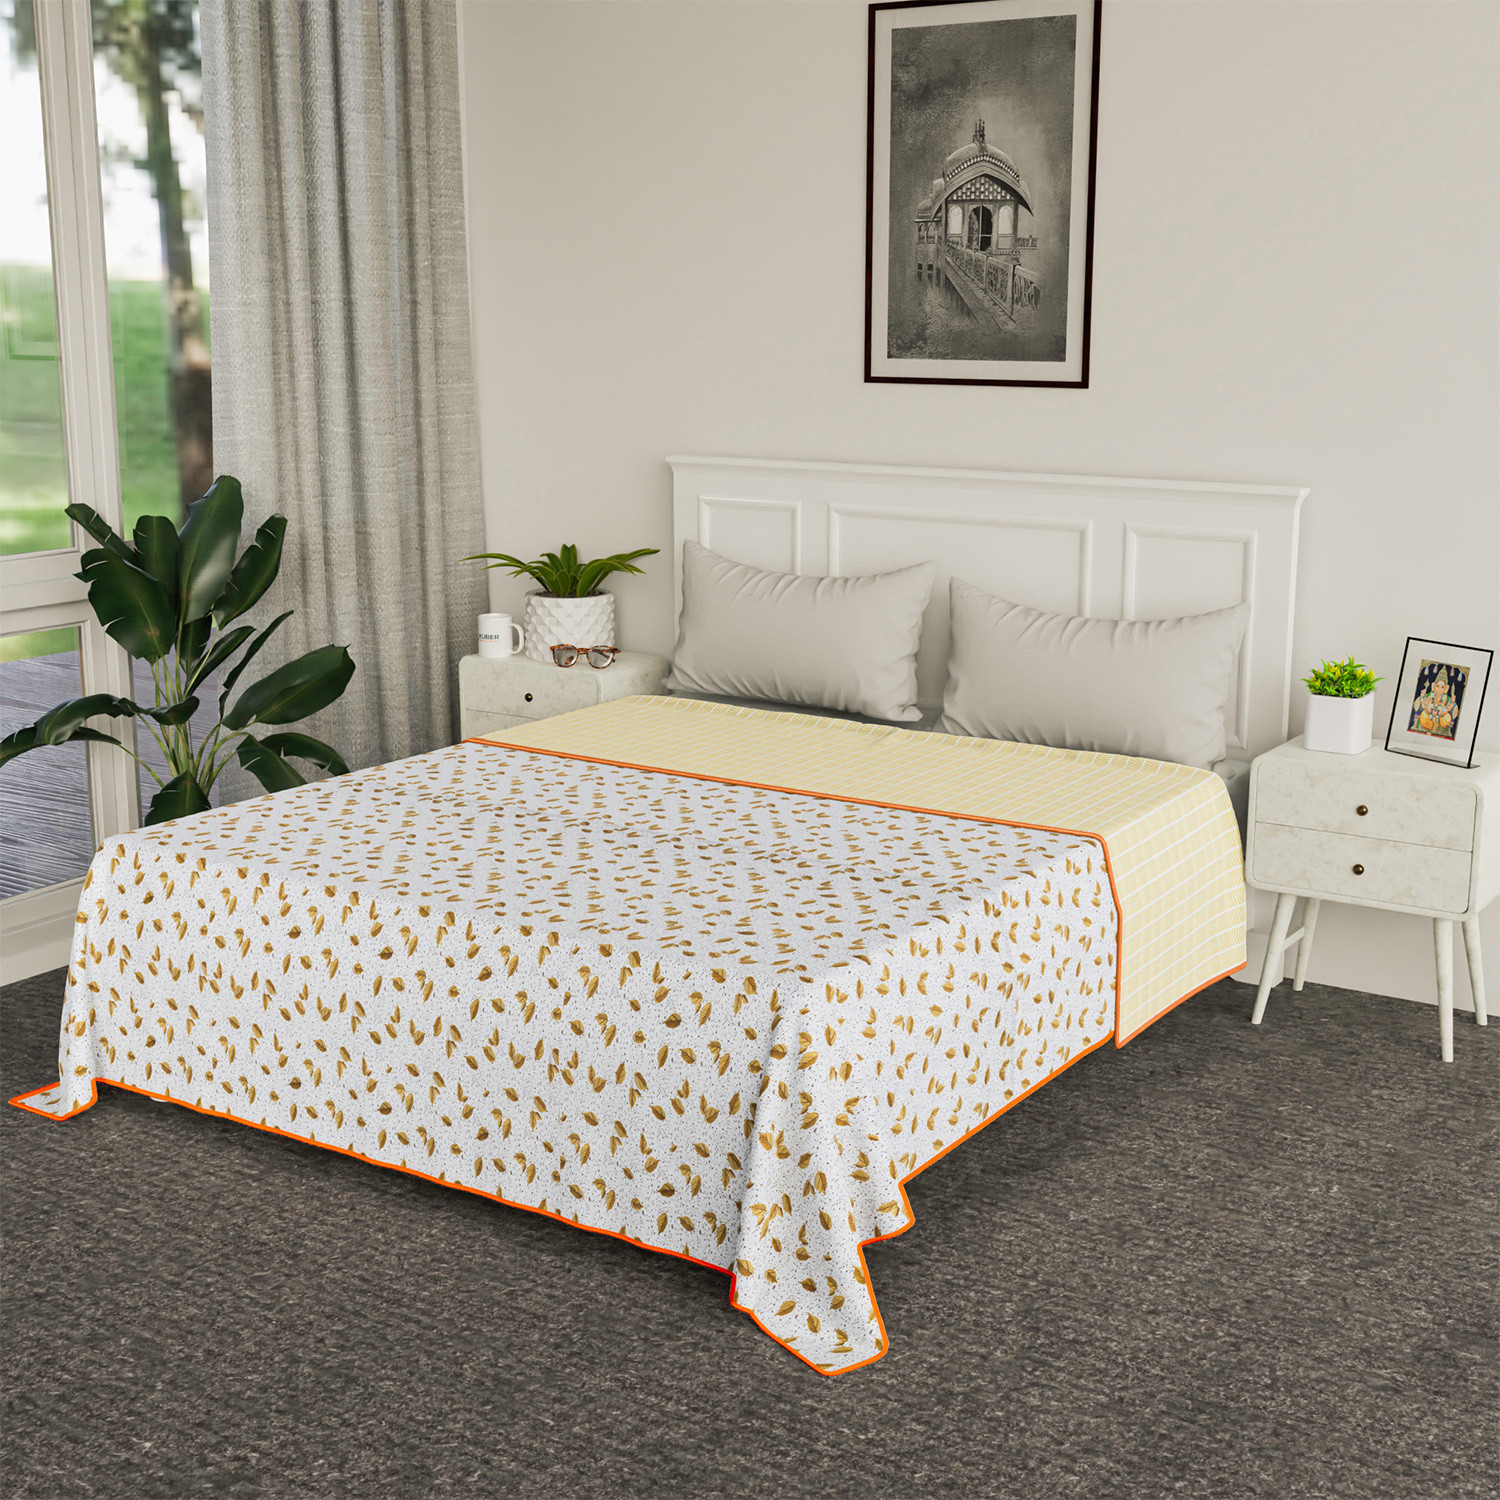 Kuber Industries Blanket | Cotton Double Bed Dohar | Blanket For Home | Reversible AC Blanket For Travelling | Blanket For Summer | Blanket For Winters | Leaf Print | Brown